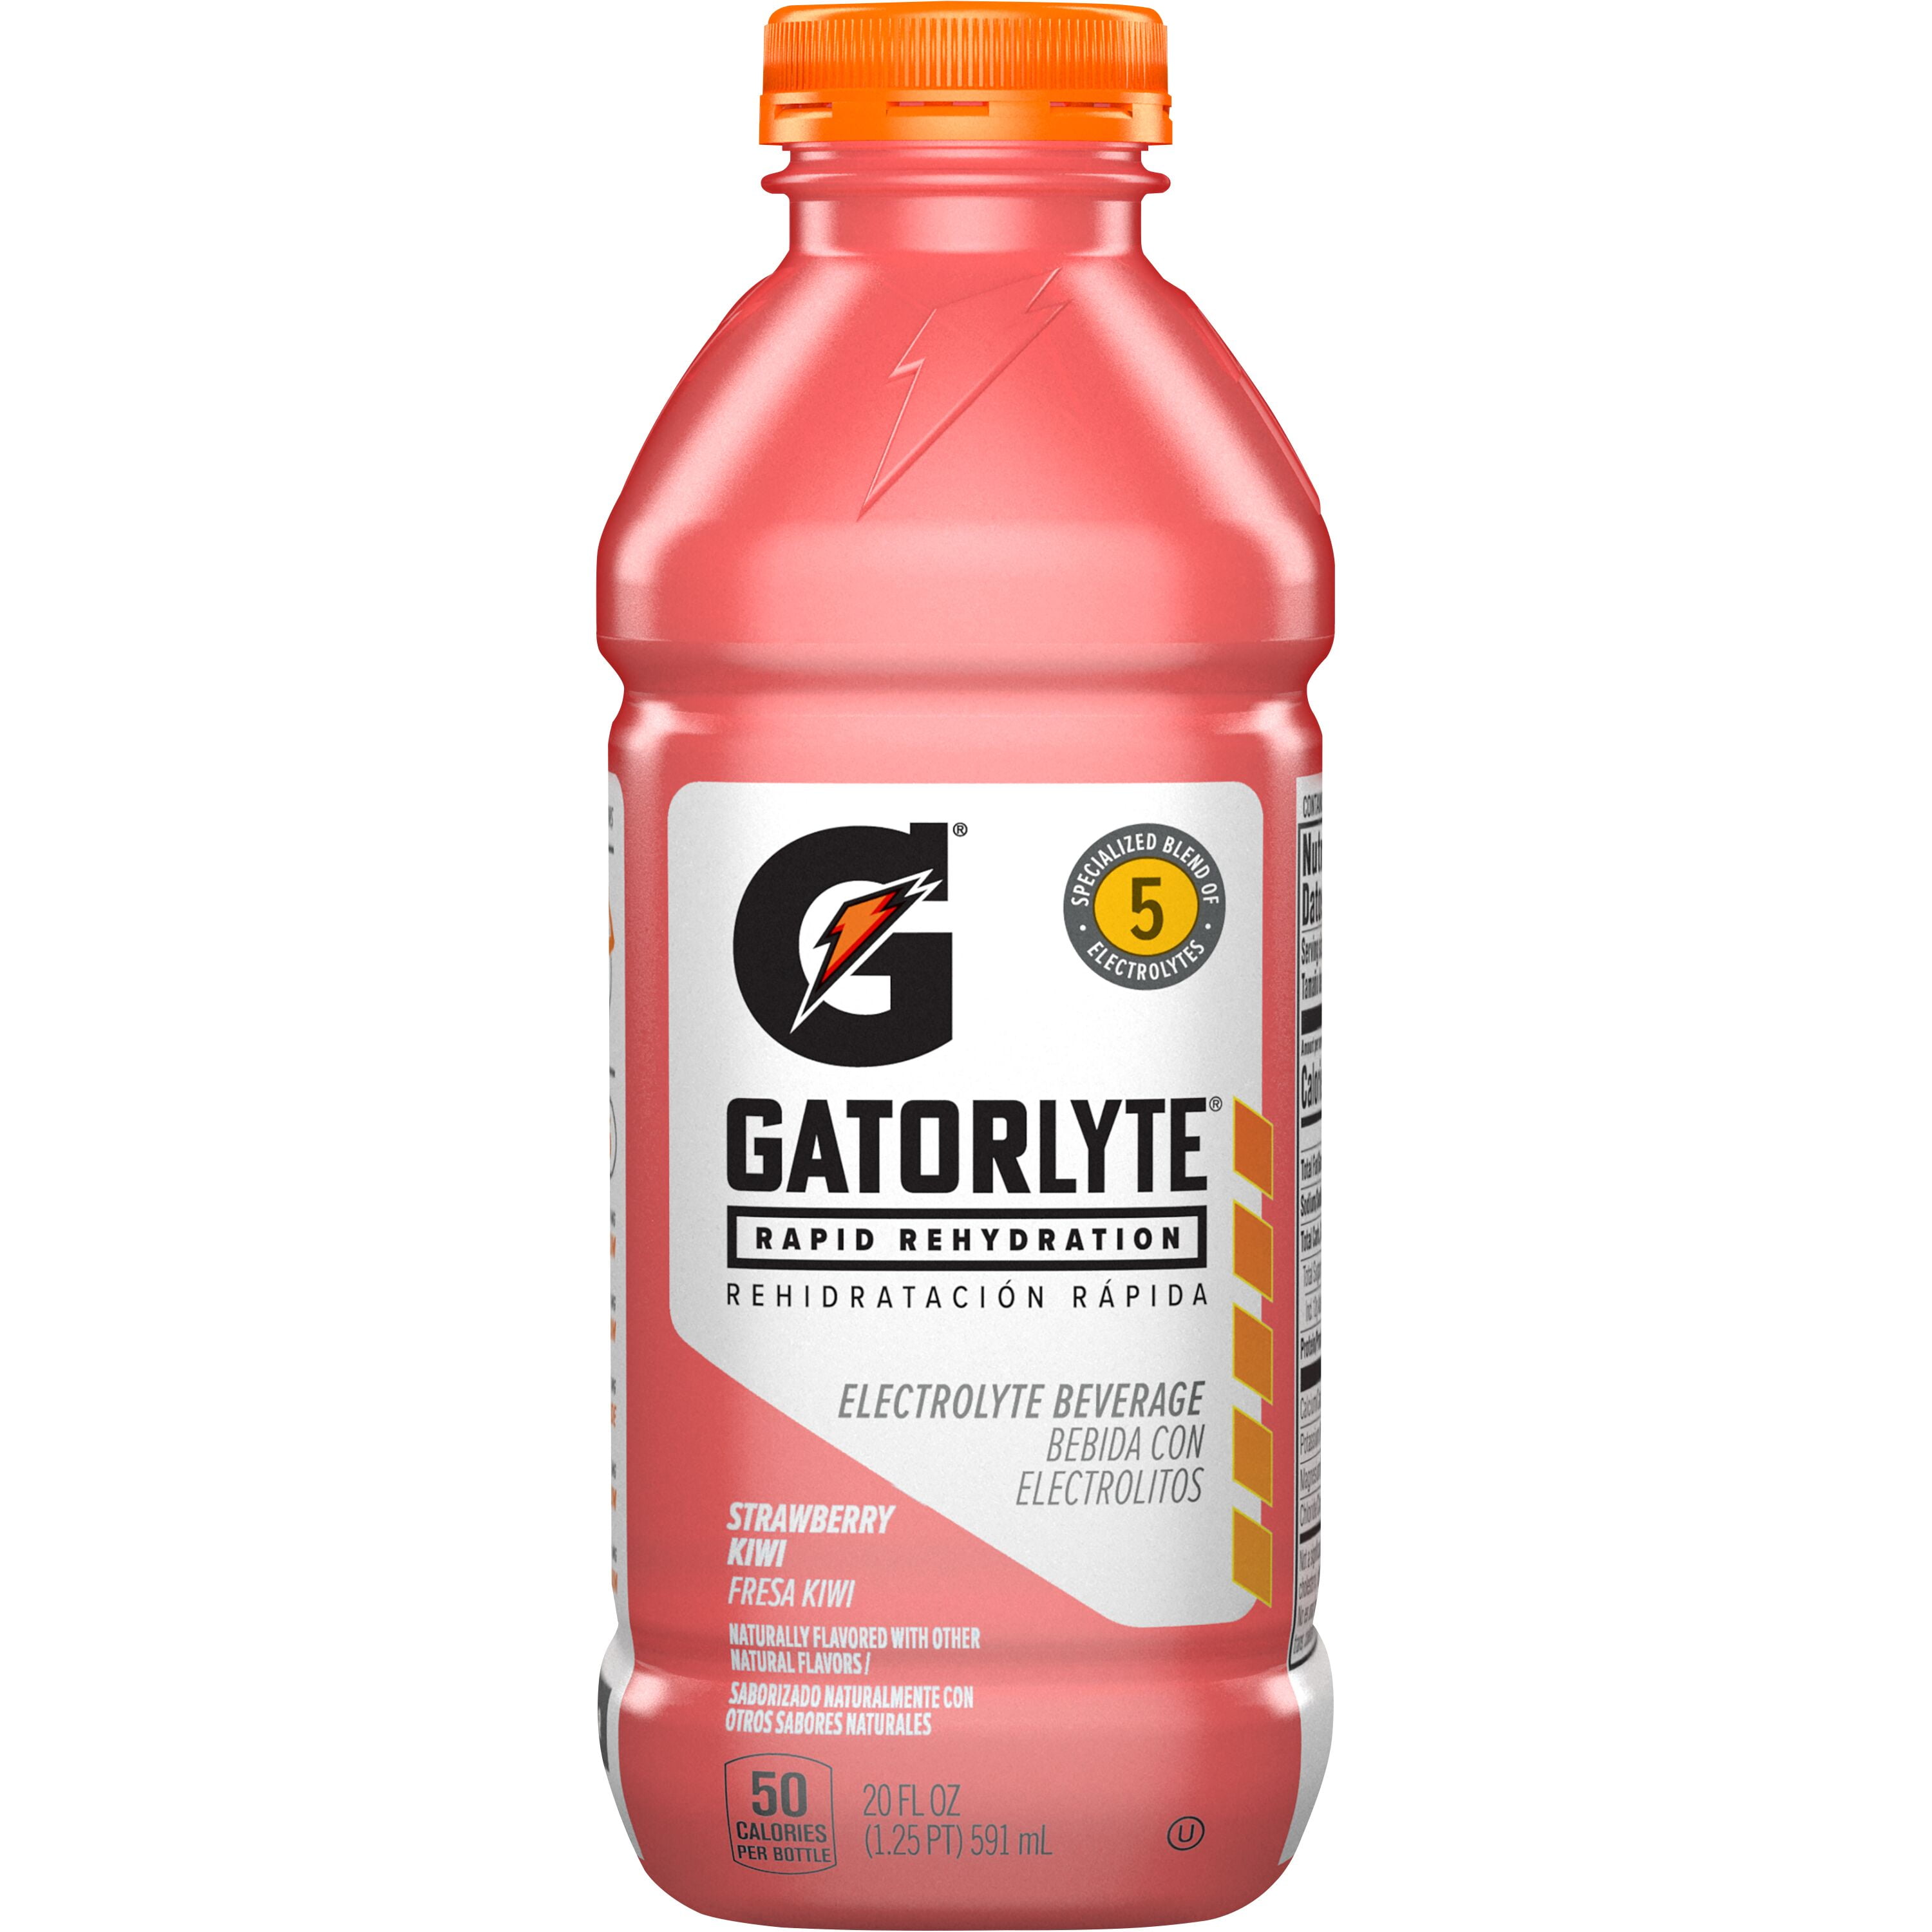 Gatorlyte Rapid Rehydration Electrolyte Beverage, Strawberry Kiwi, 20